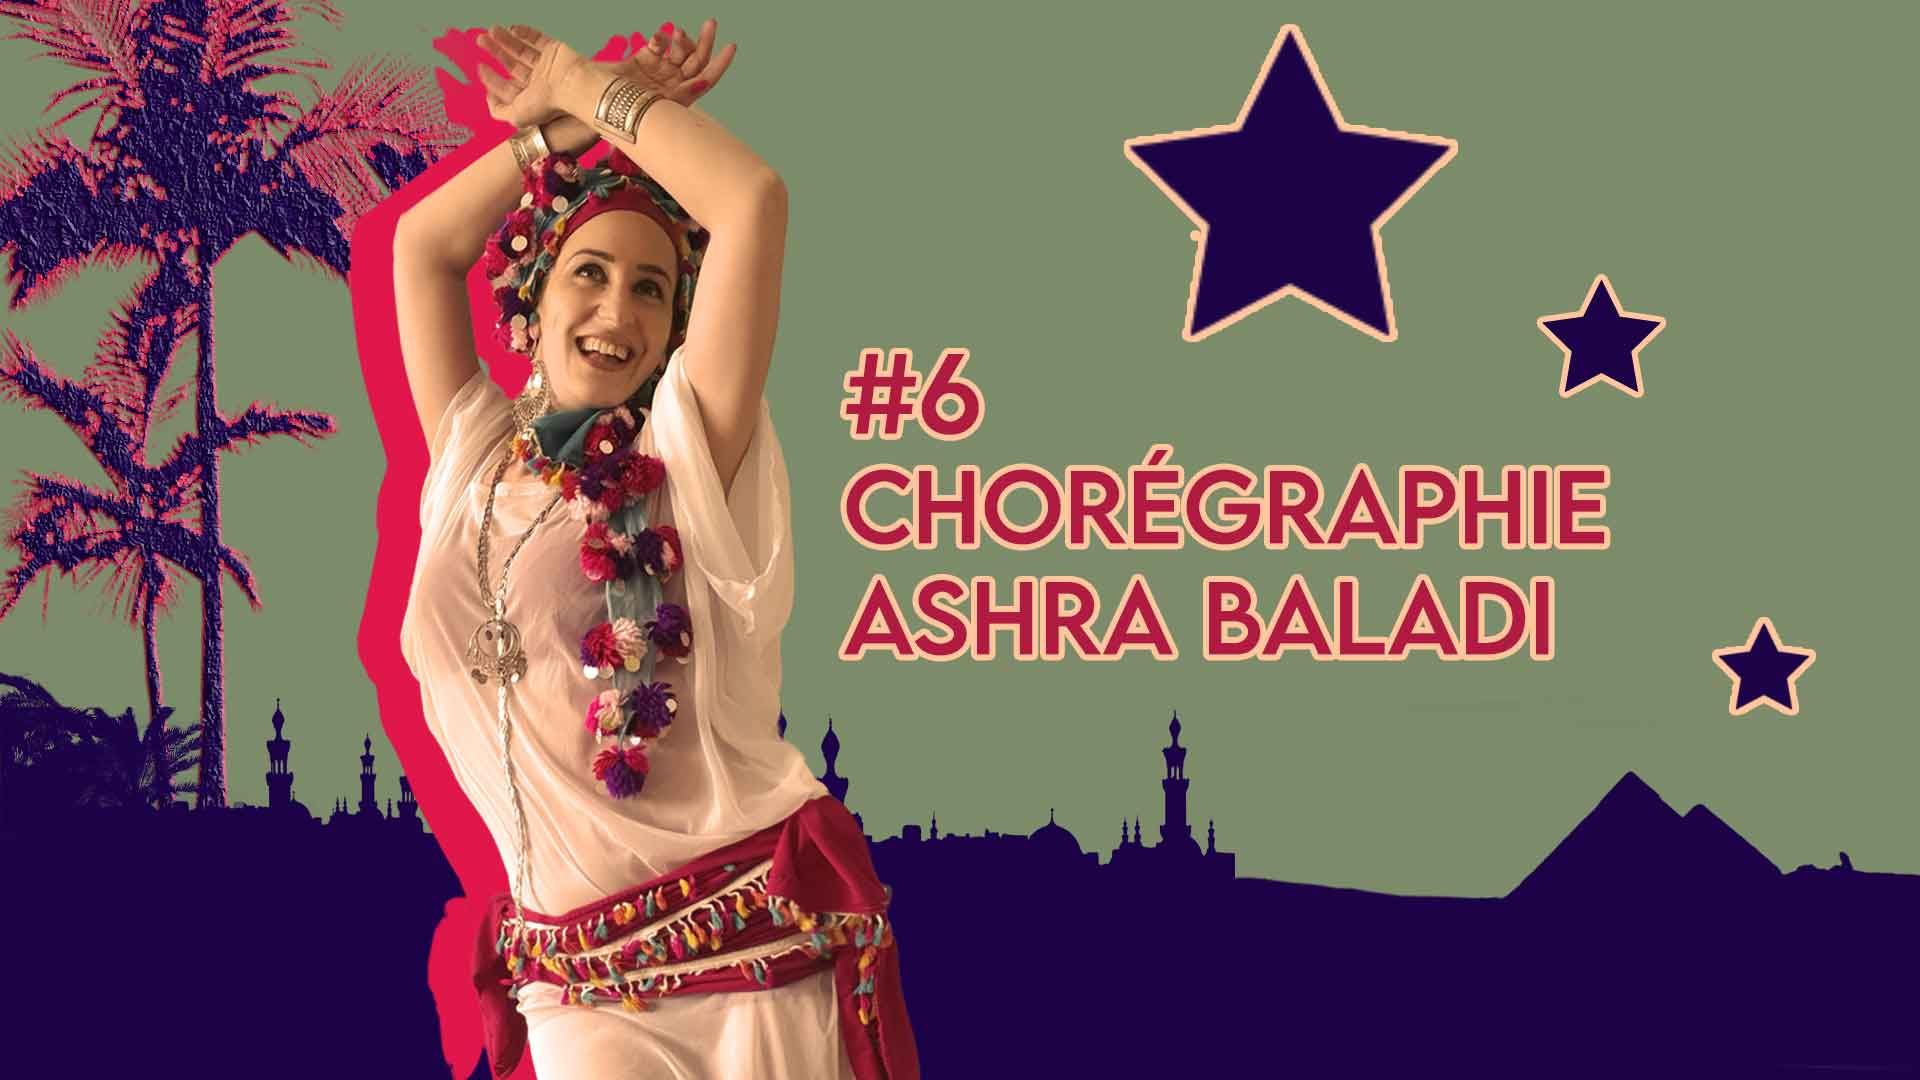 Cours 6 danse orientale en ligne : Ashra baladi chorégraphie